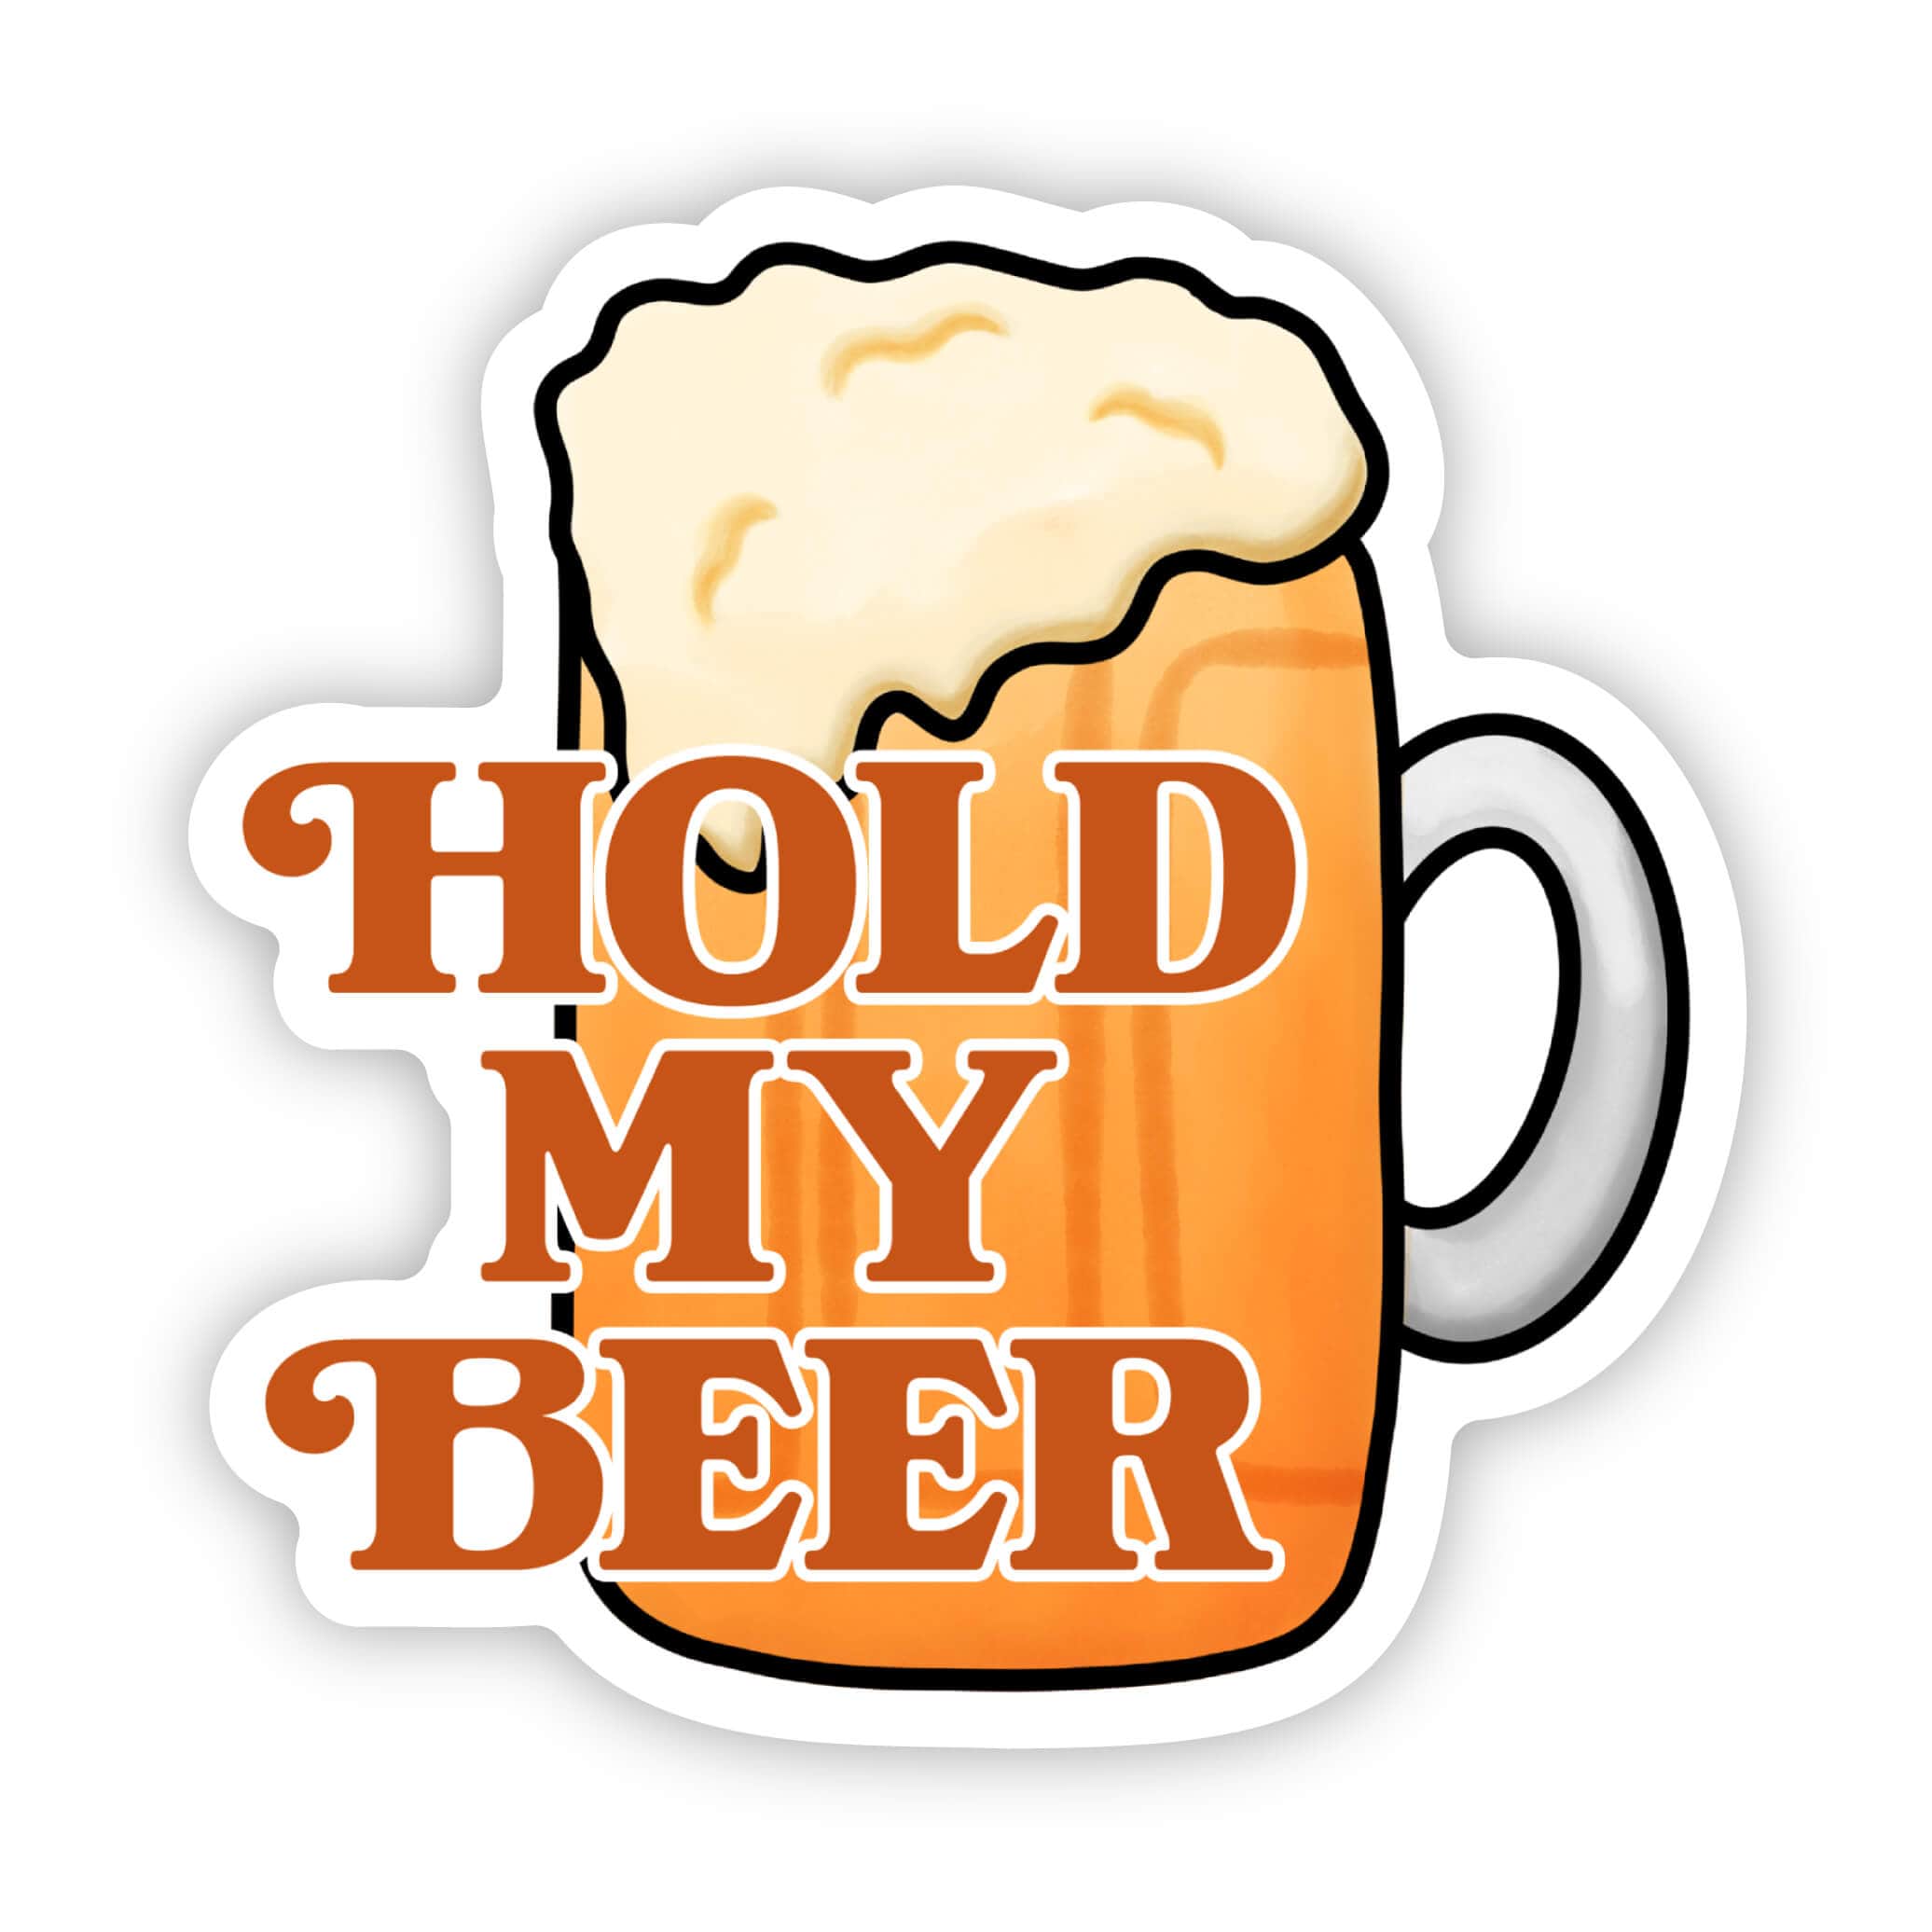 Hold my beer sticker – Big Moods